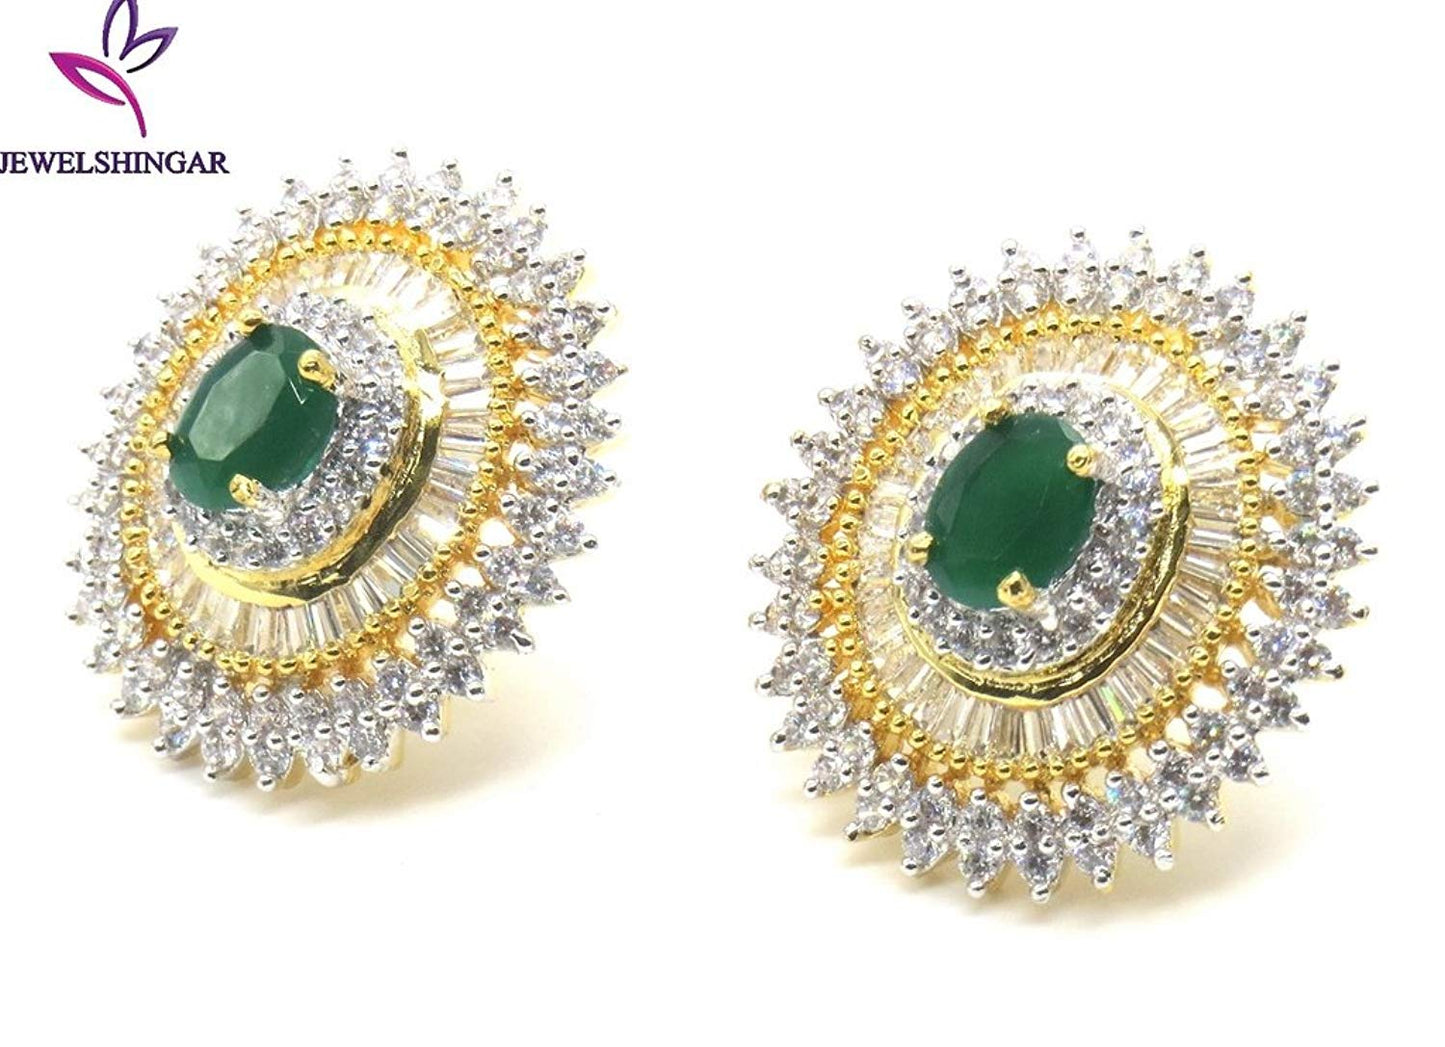 Jewelshingar Jewellery Diamond Look Silver Gold Plated Green Colour Earrings For Women (44230-ead-green-studs)